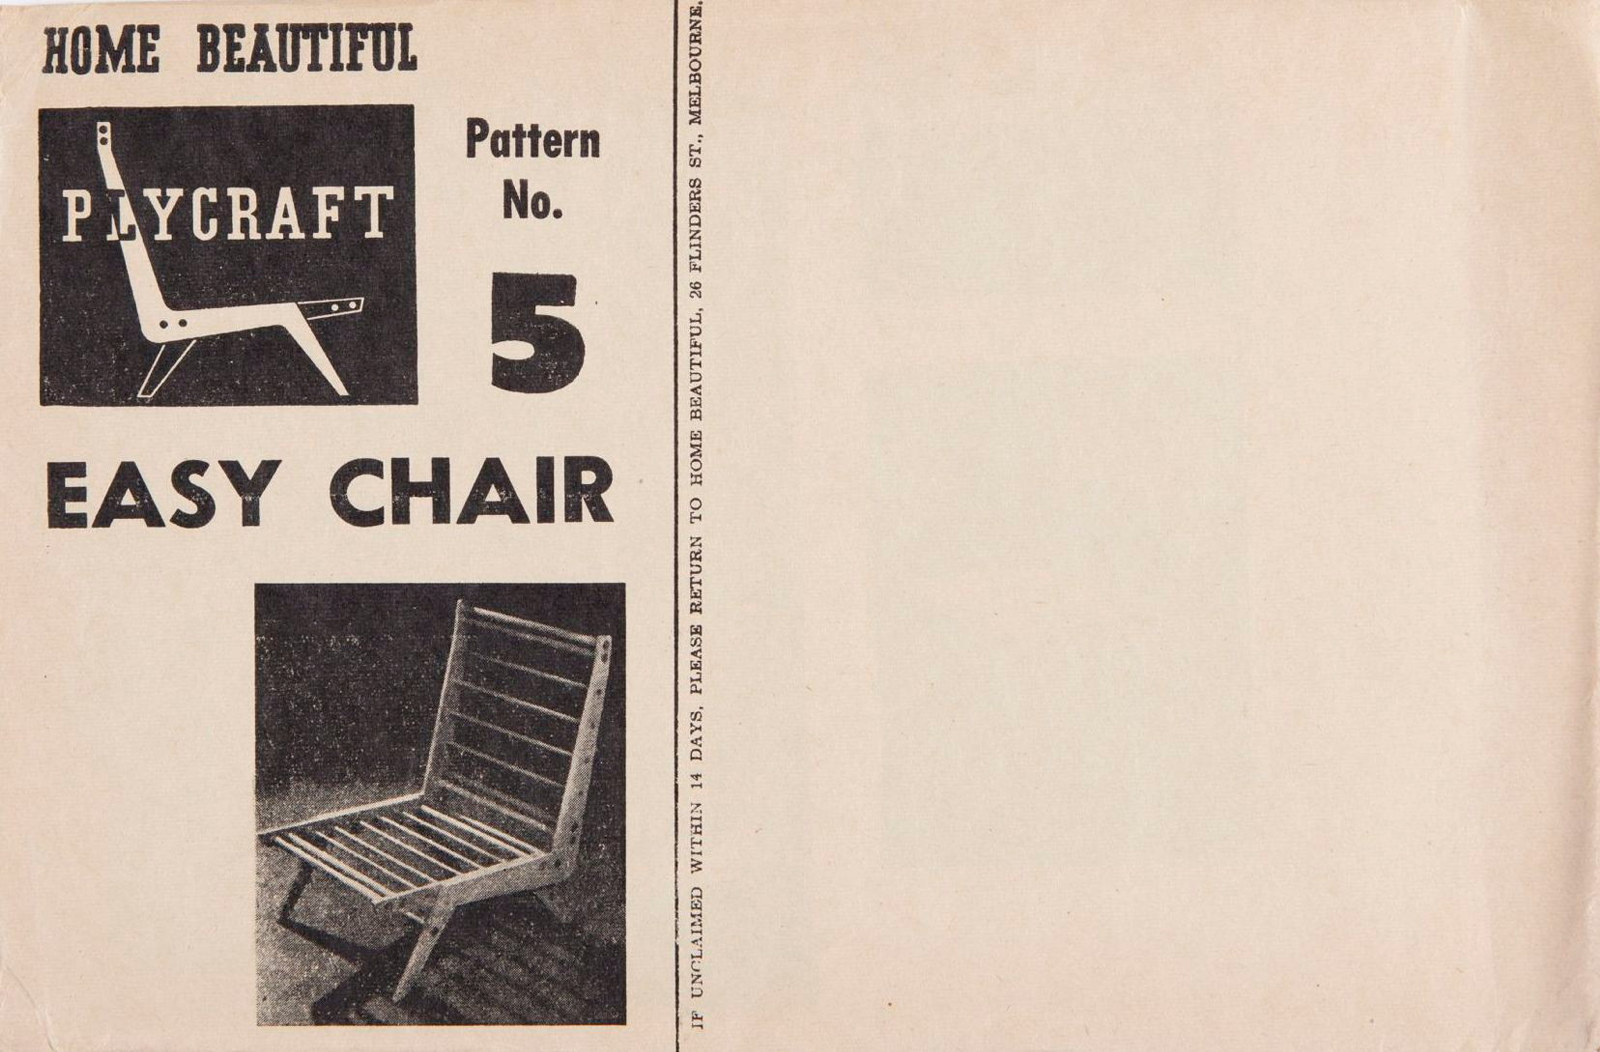 Paper pattern for Australian Home Beautiful Plycraft furniture, 1954